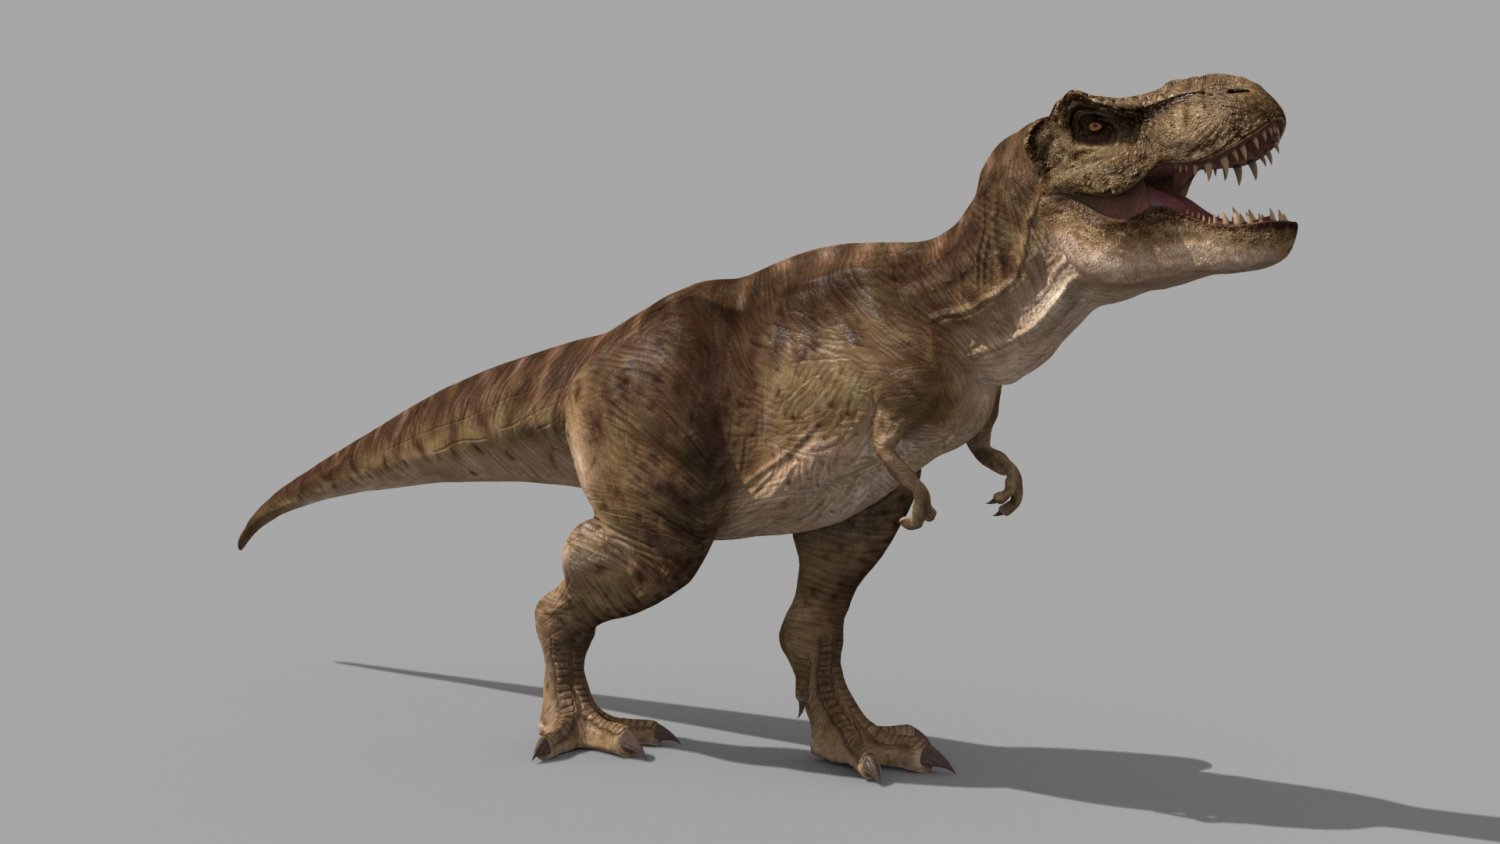 Desenhos animados T-Rex Modelo 3D $39 - .xsi .lwo .max - Free3D